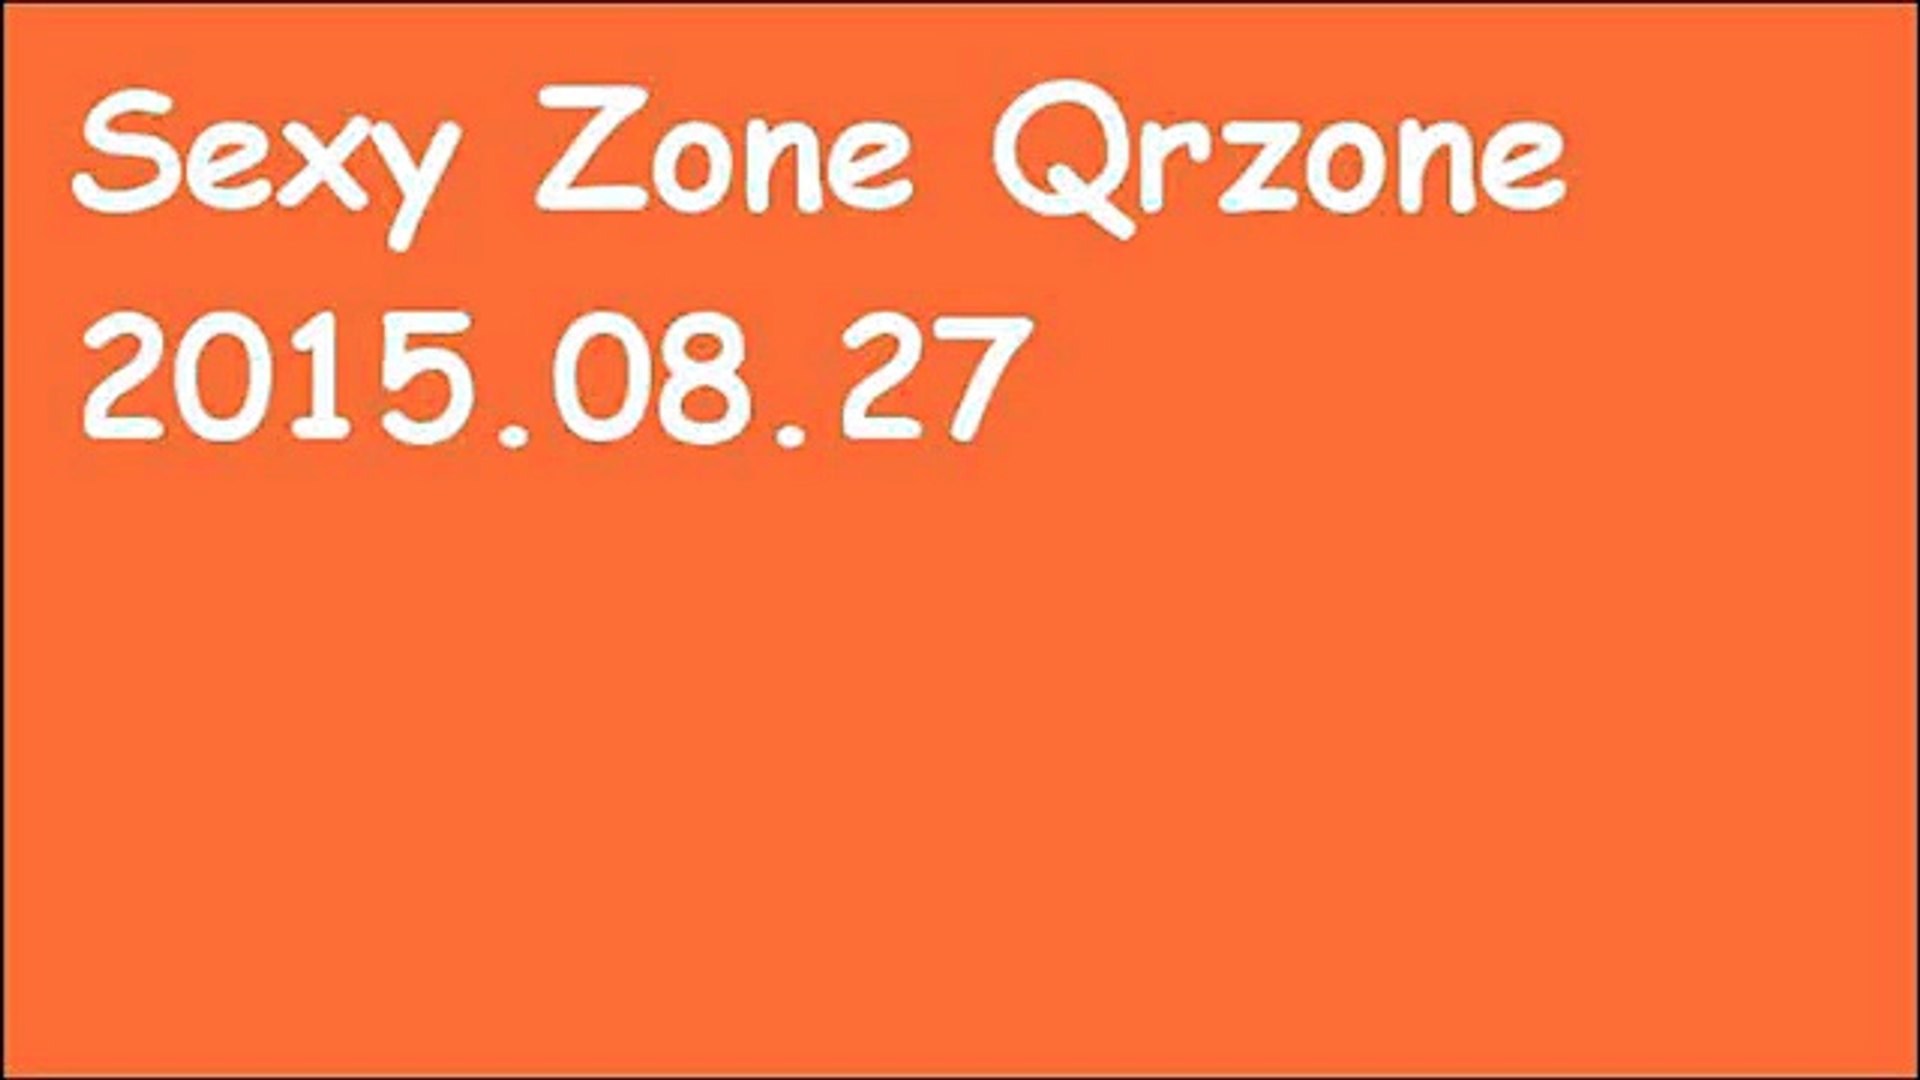 Sexy Zone Qrzone 15年8月27日 全員 菊池風磨 松島聡 佐藤勝利 マリウス葉 中島健人 Dailymotion Video